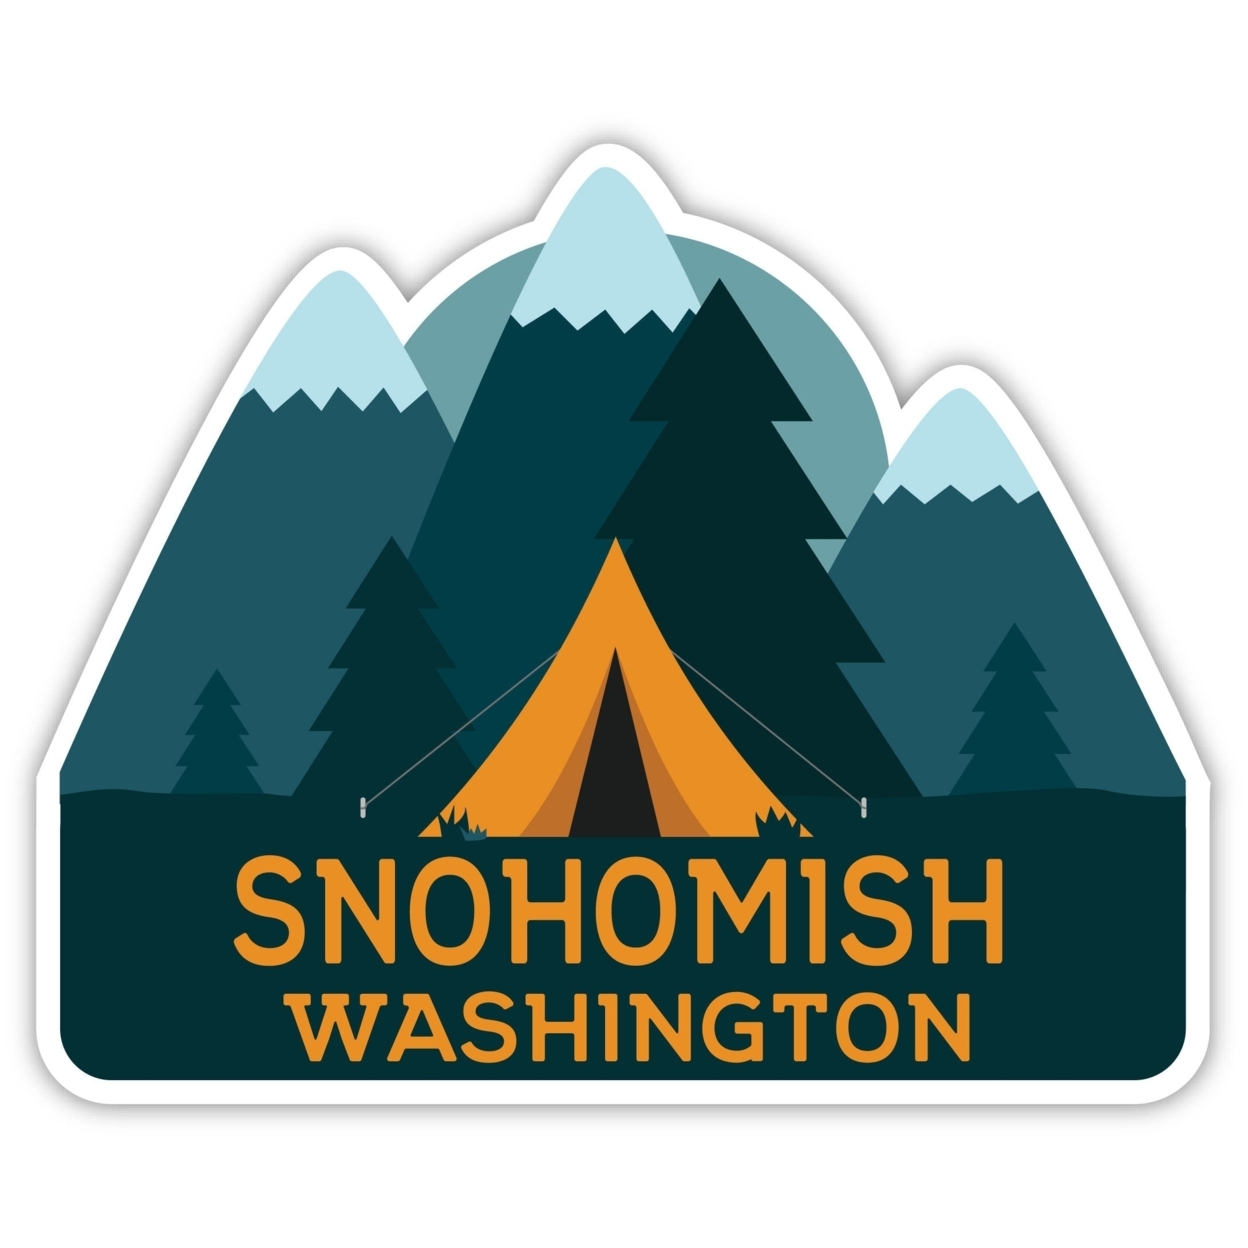 Snohomish Washington Souvenir Decorative Stickers (Choose Theme And Size) - Single Unit, 4-Inch, Tent